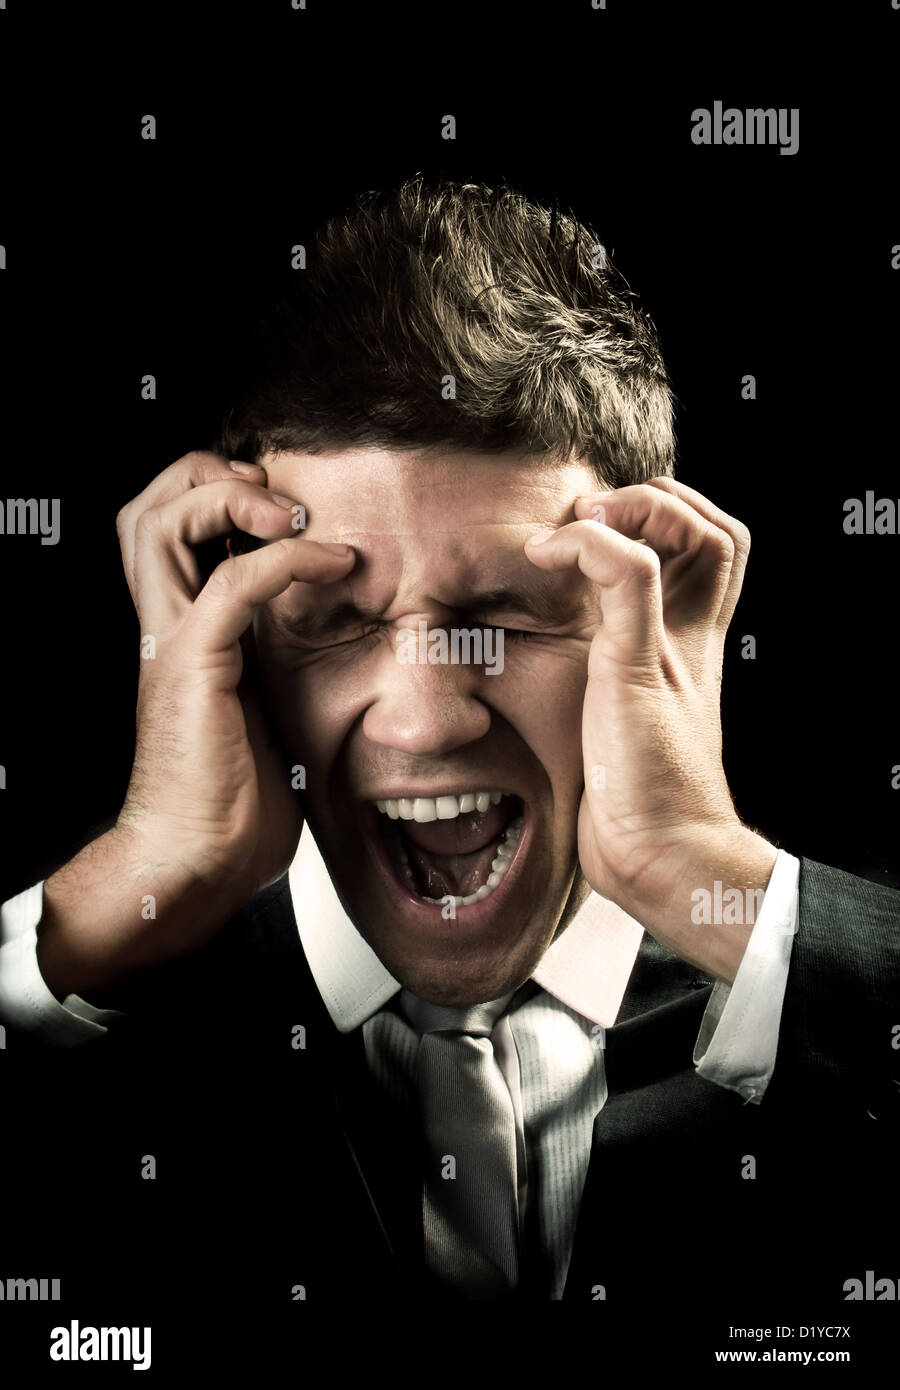 Businessman screaming and has a bad headache Stock Photo